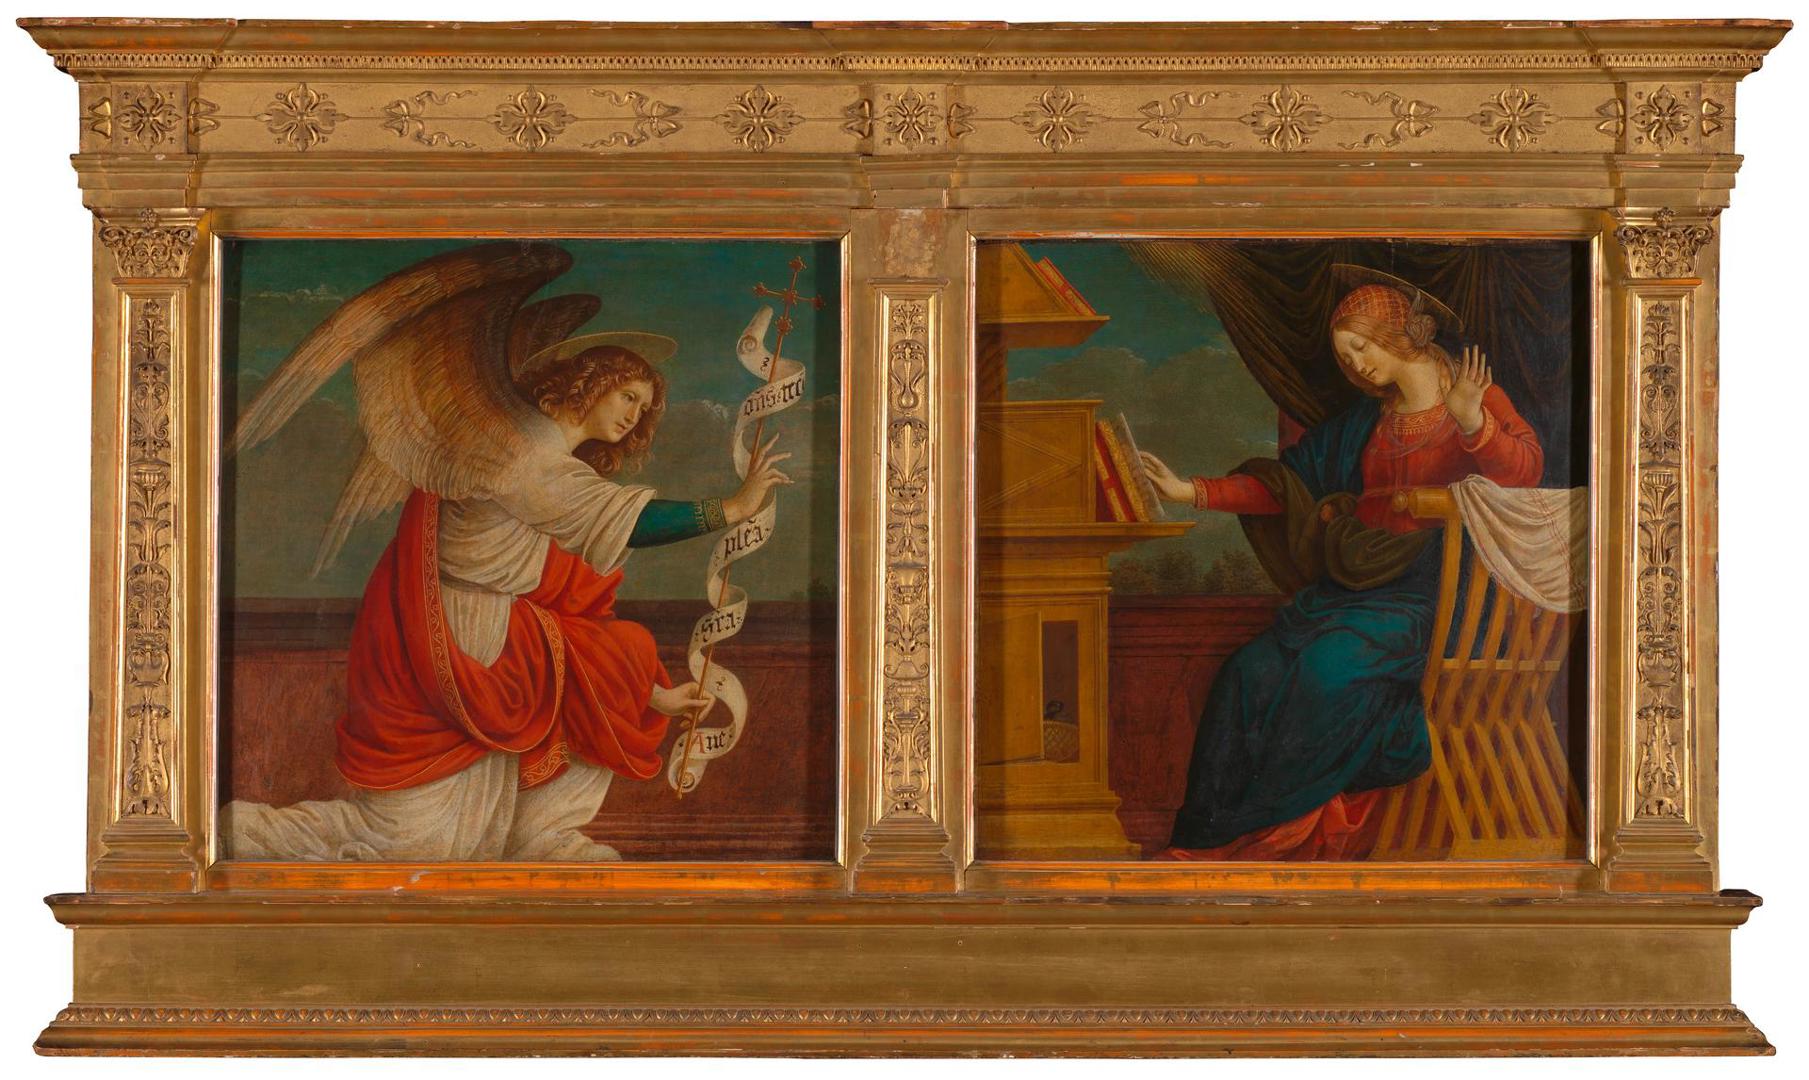 Panels from an Altarpiece: The Annunciation by Gaudenzio Ferrari